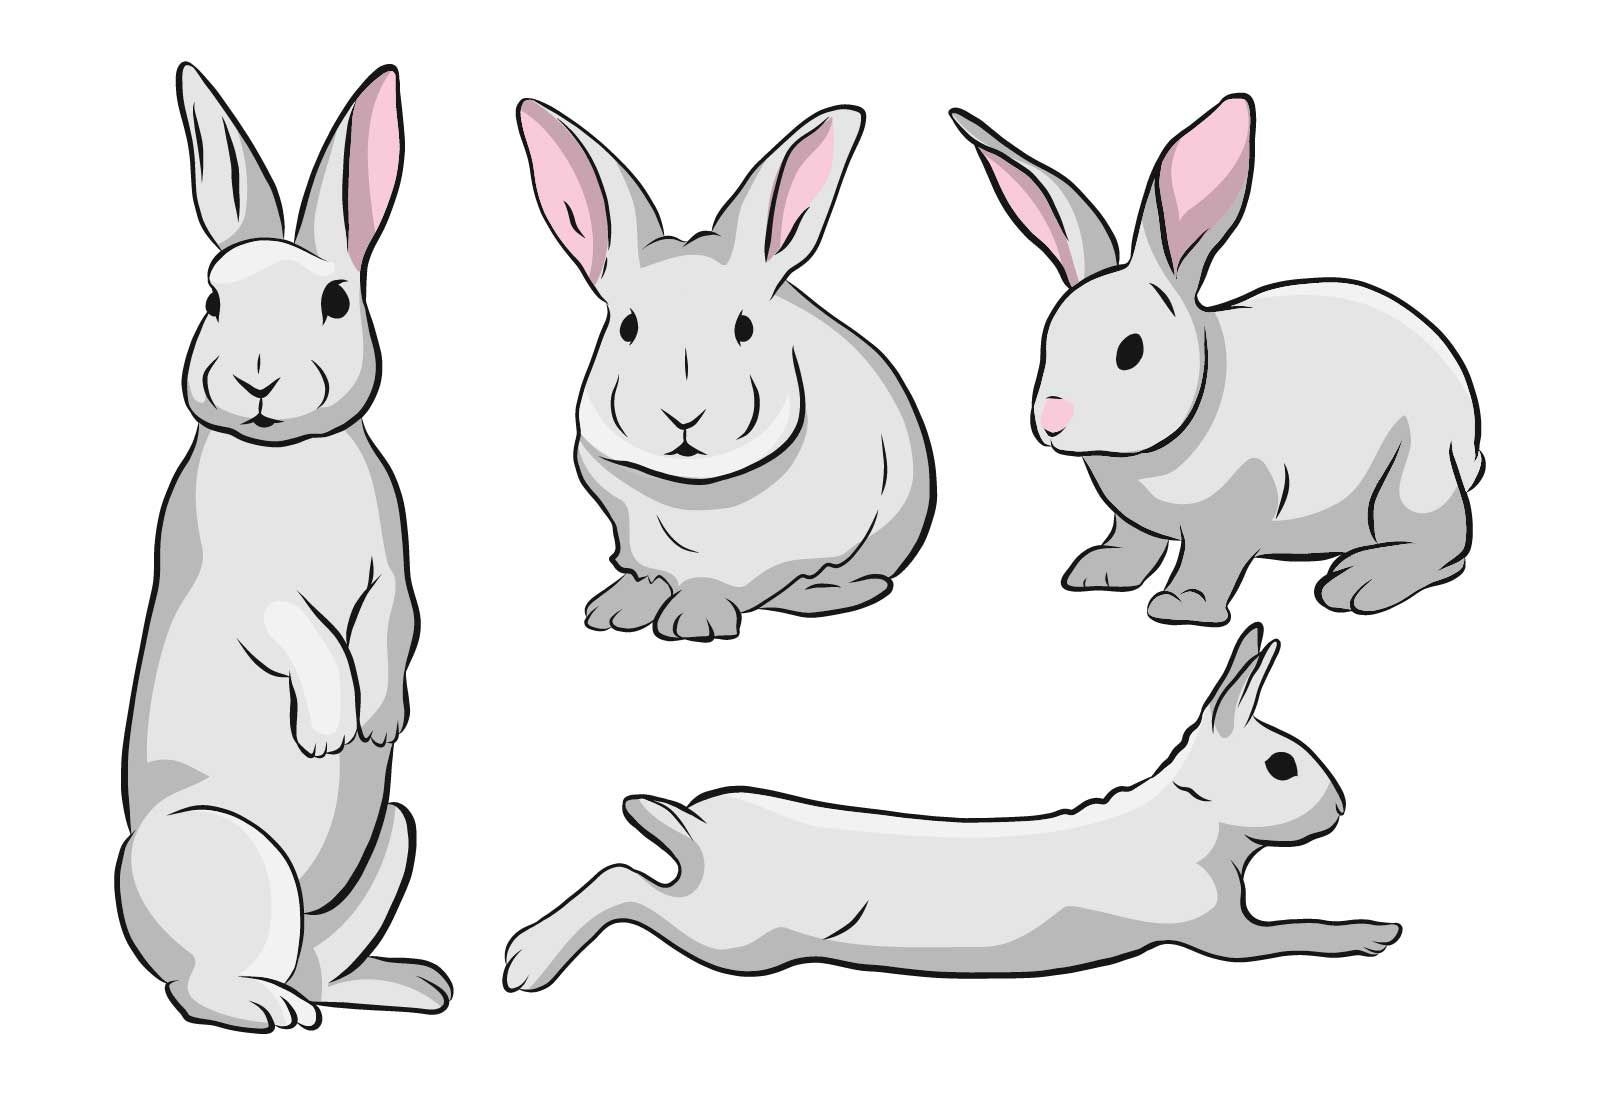 Nettes Kaninchen-Illustrationsset